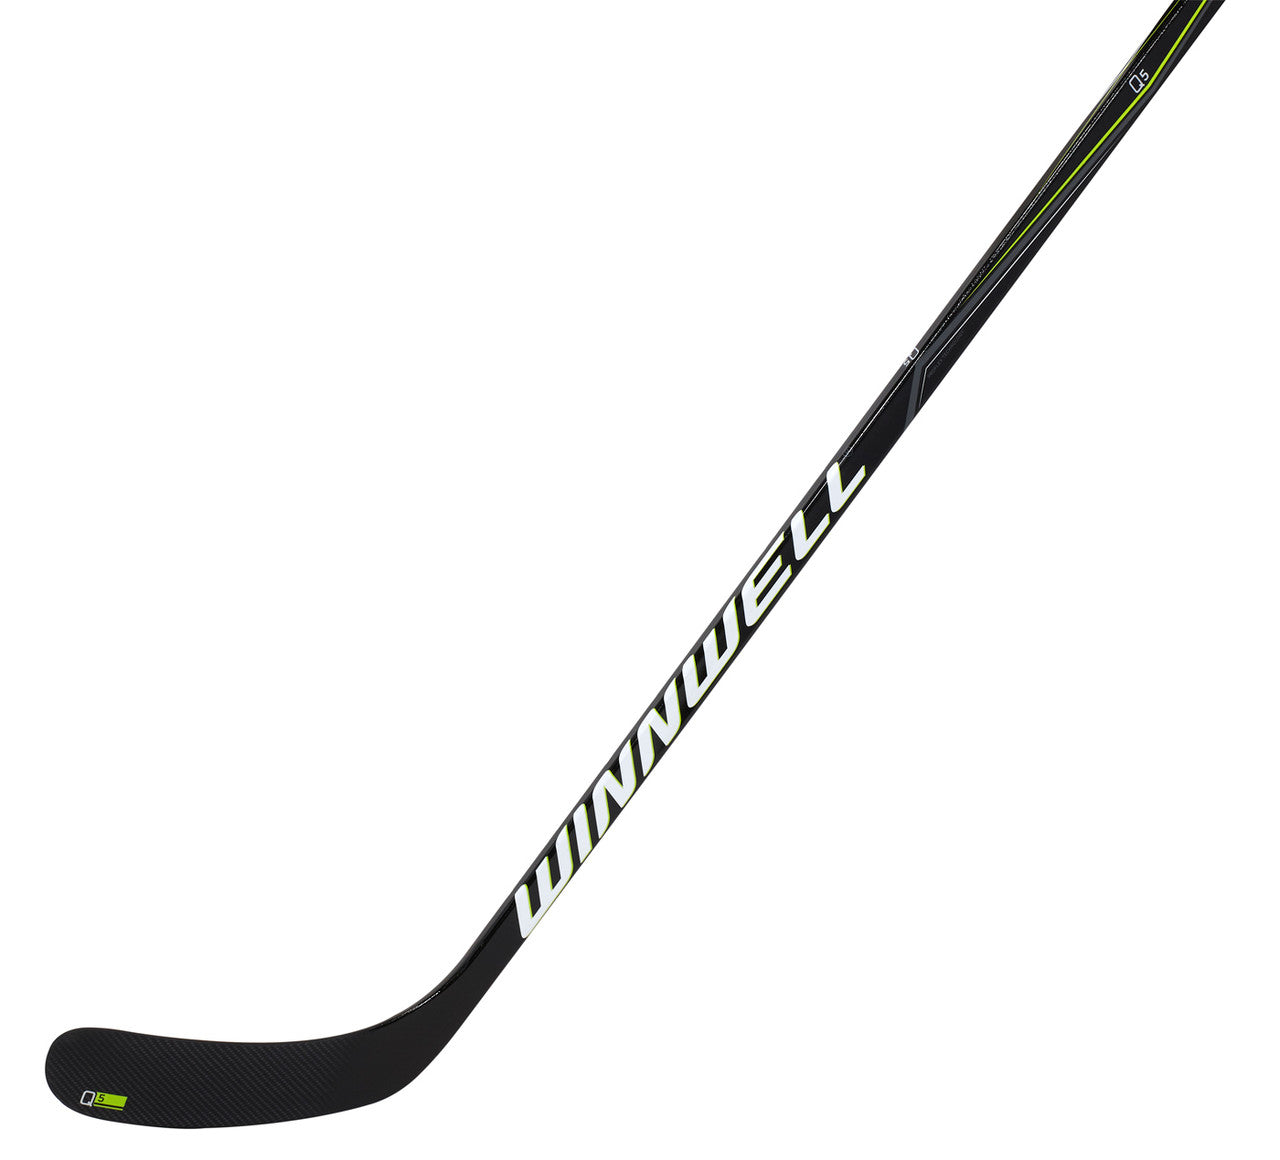 Winnwell Senior Hockey Stick Q5 Flex 85 Blade PS119 W/Grip New